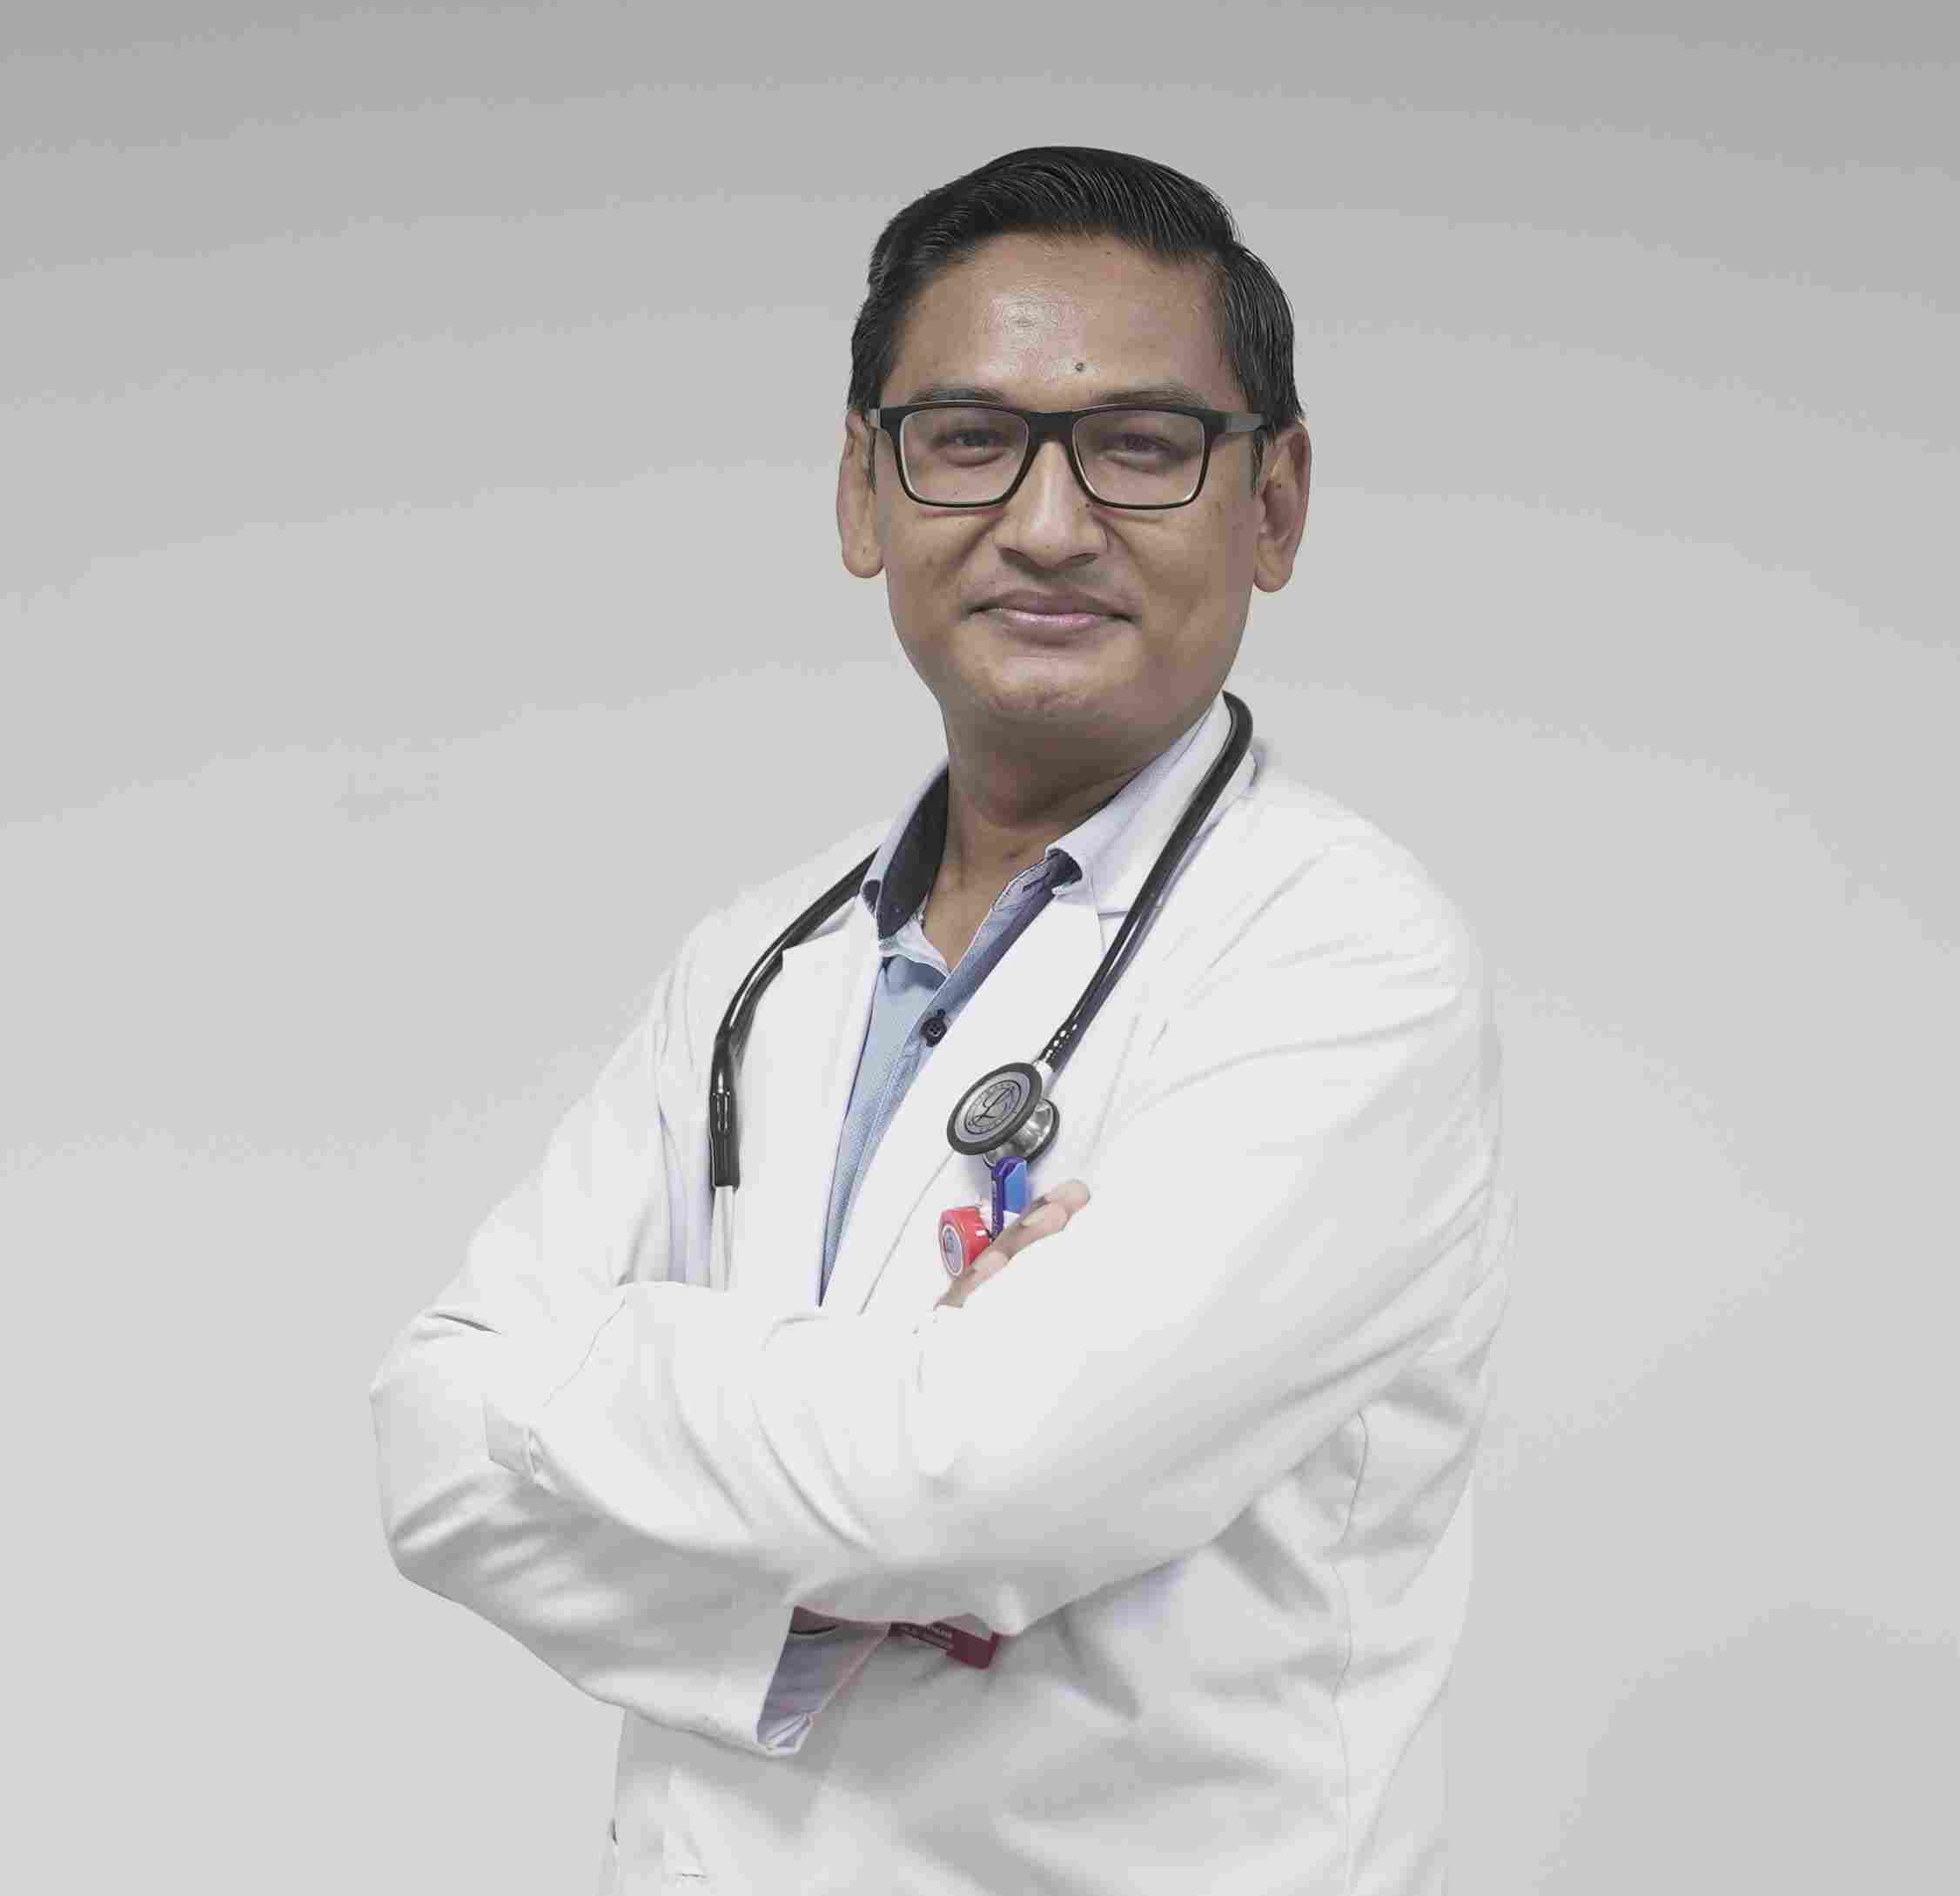 Dr. Raju Shrestha